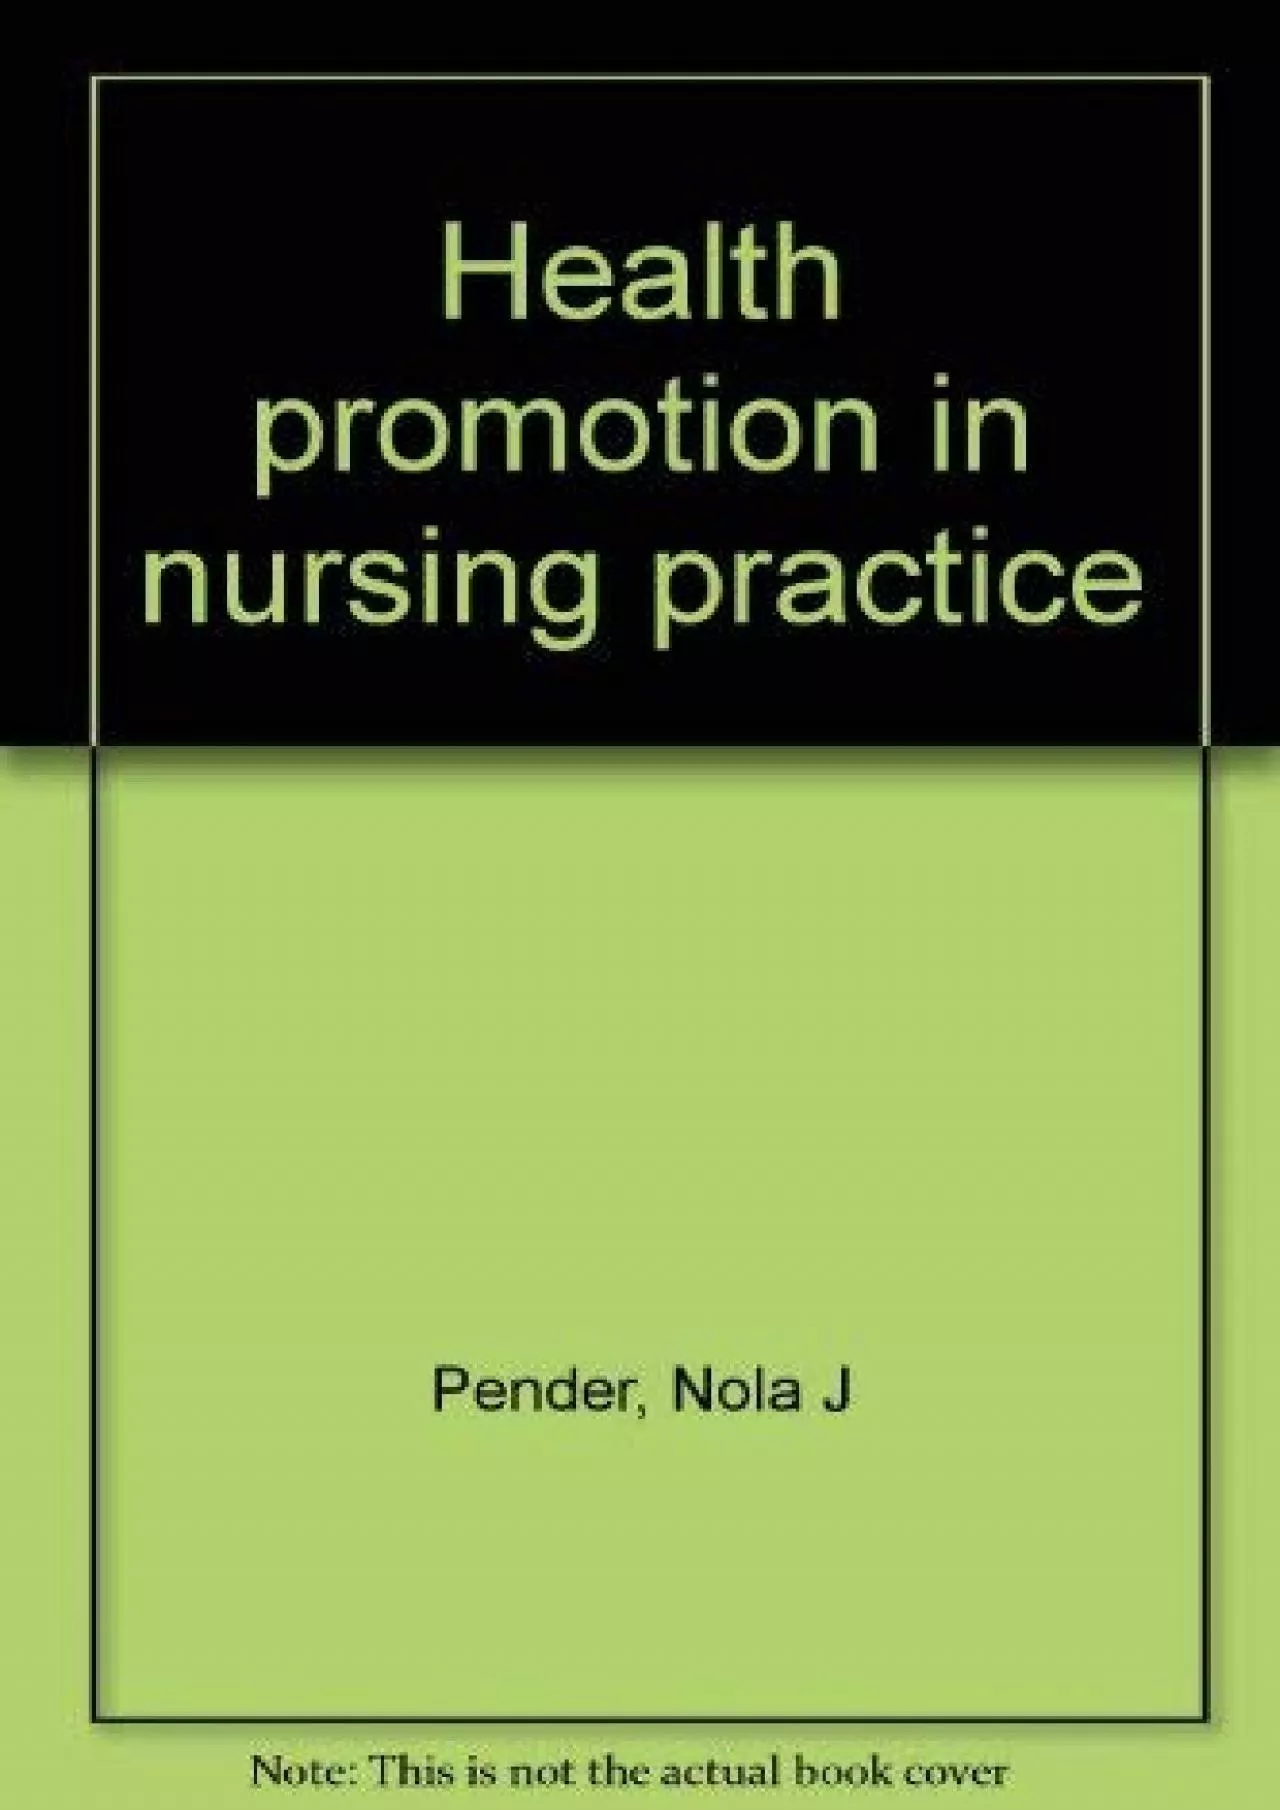 (DOWNLOAD)-Health promotion in nursing practice